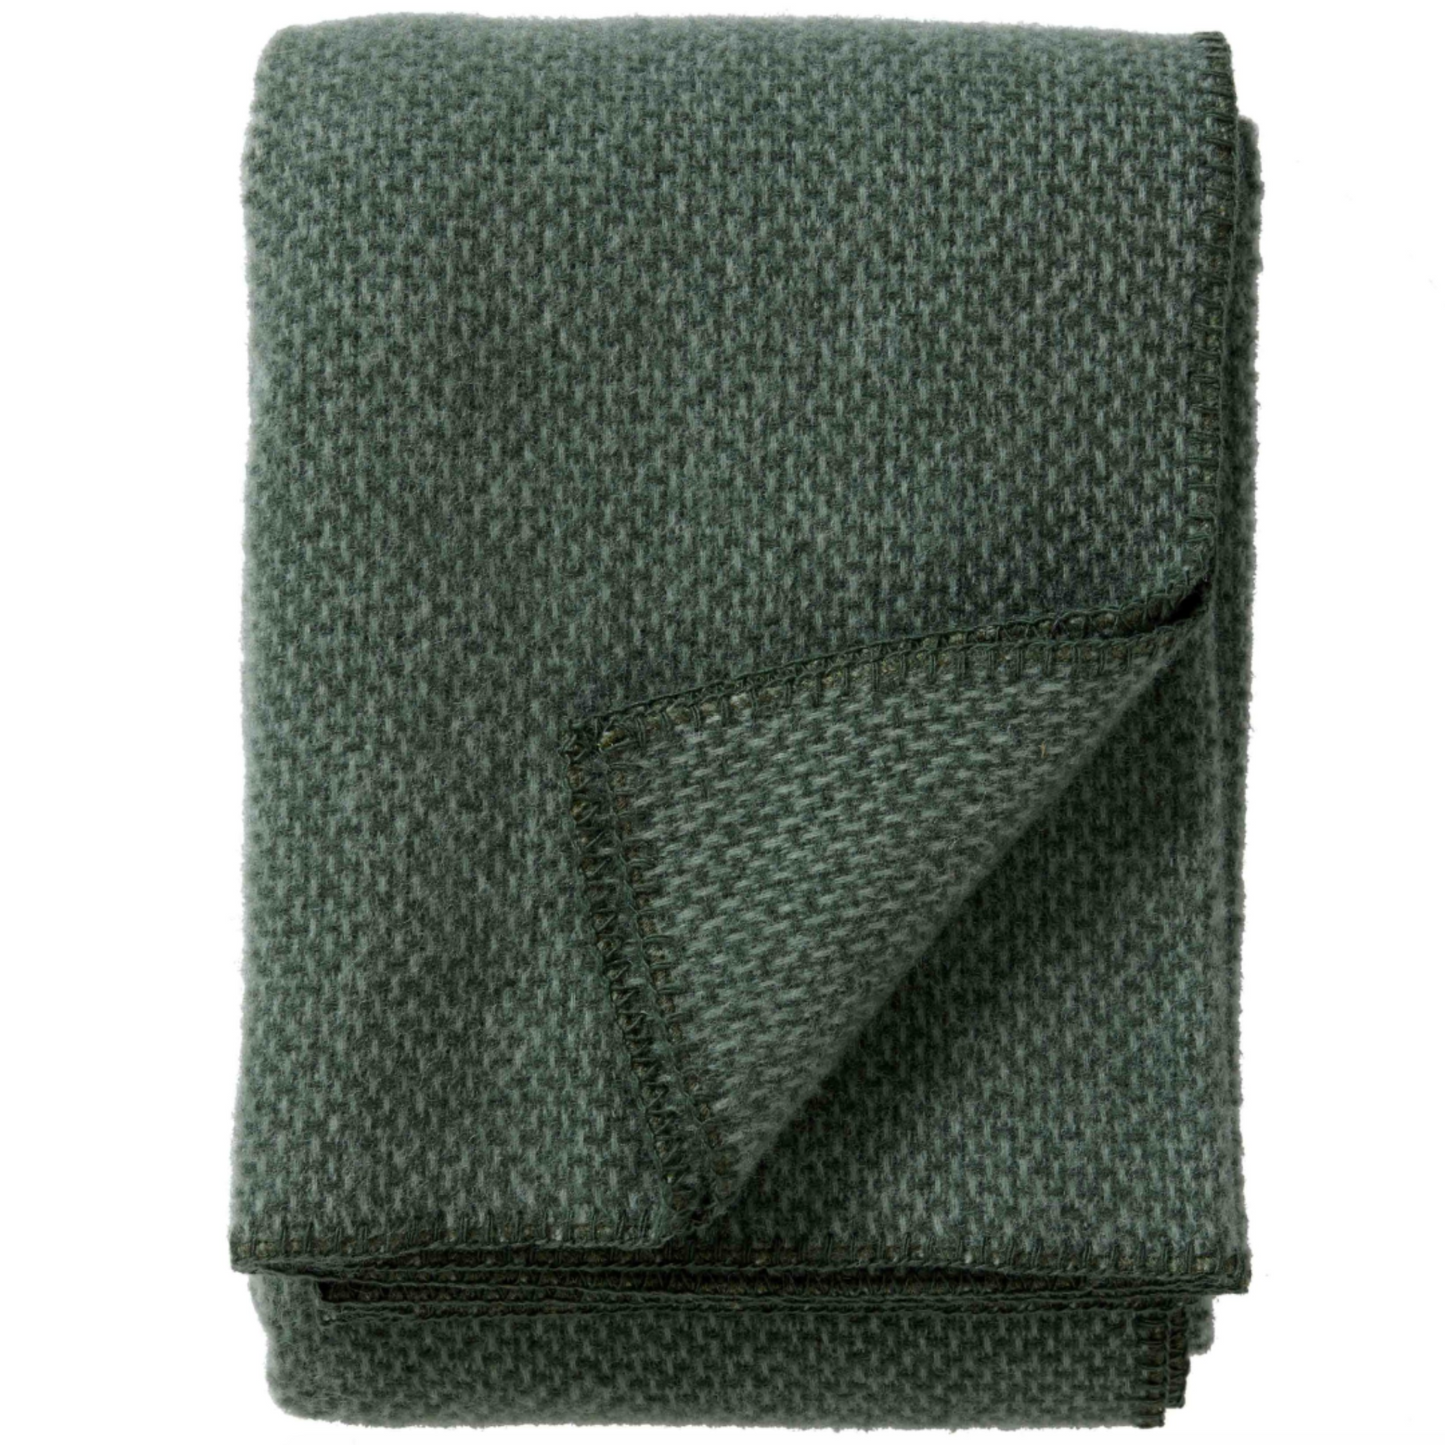 Klippan Domino Wool Blanket, 130x180cm (9410809810)